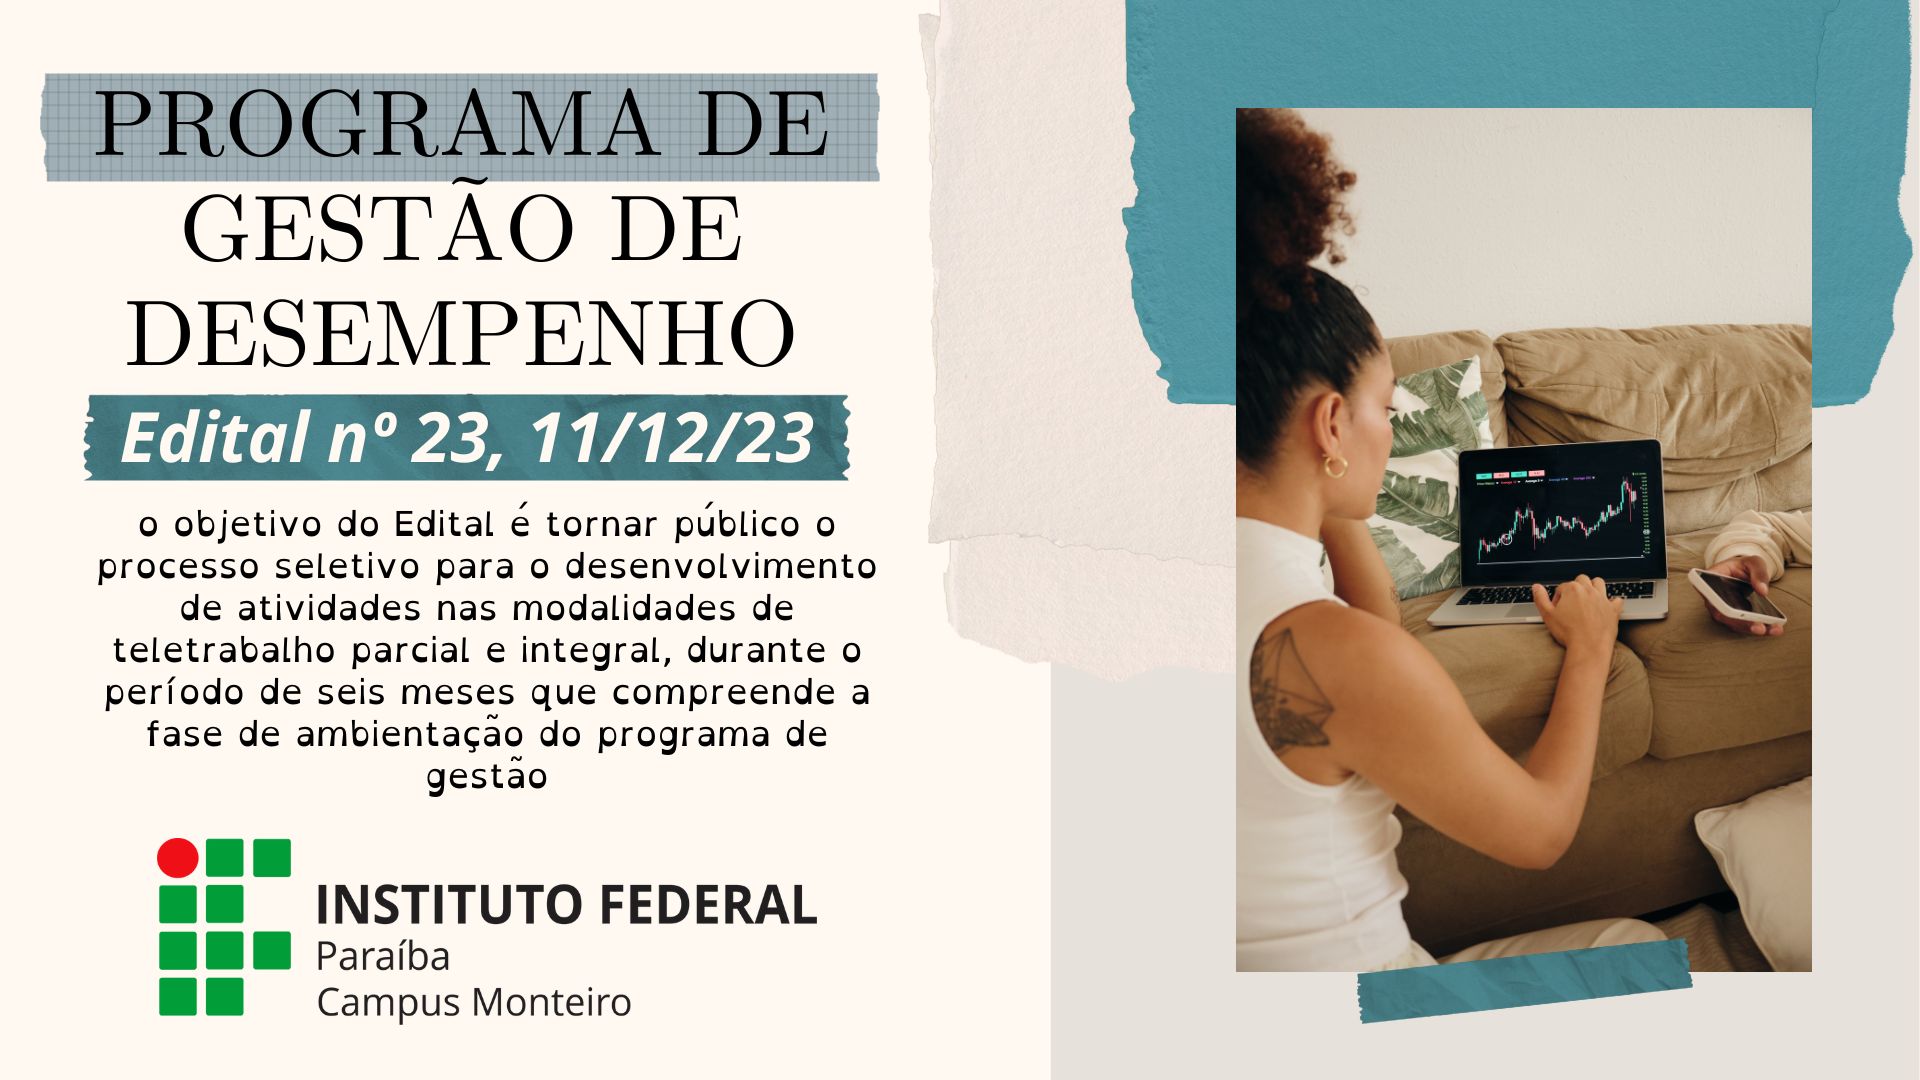 IFBA divulga programação do FLIRFEP 2023 - Jornal Grande Bahia (JGB)